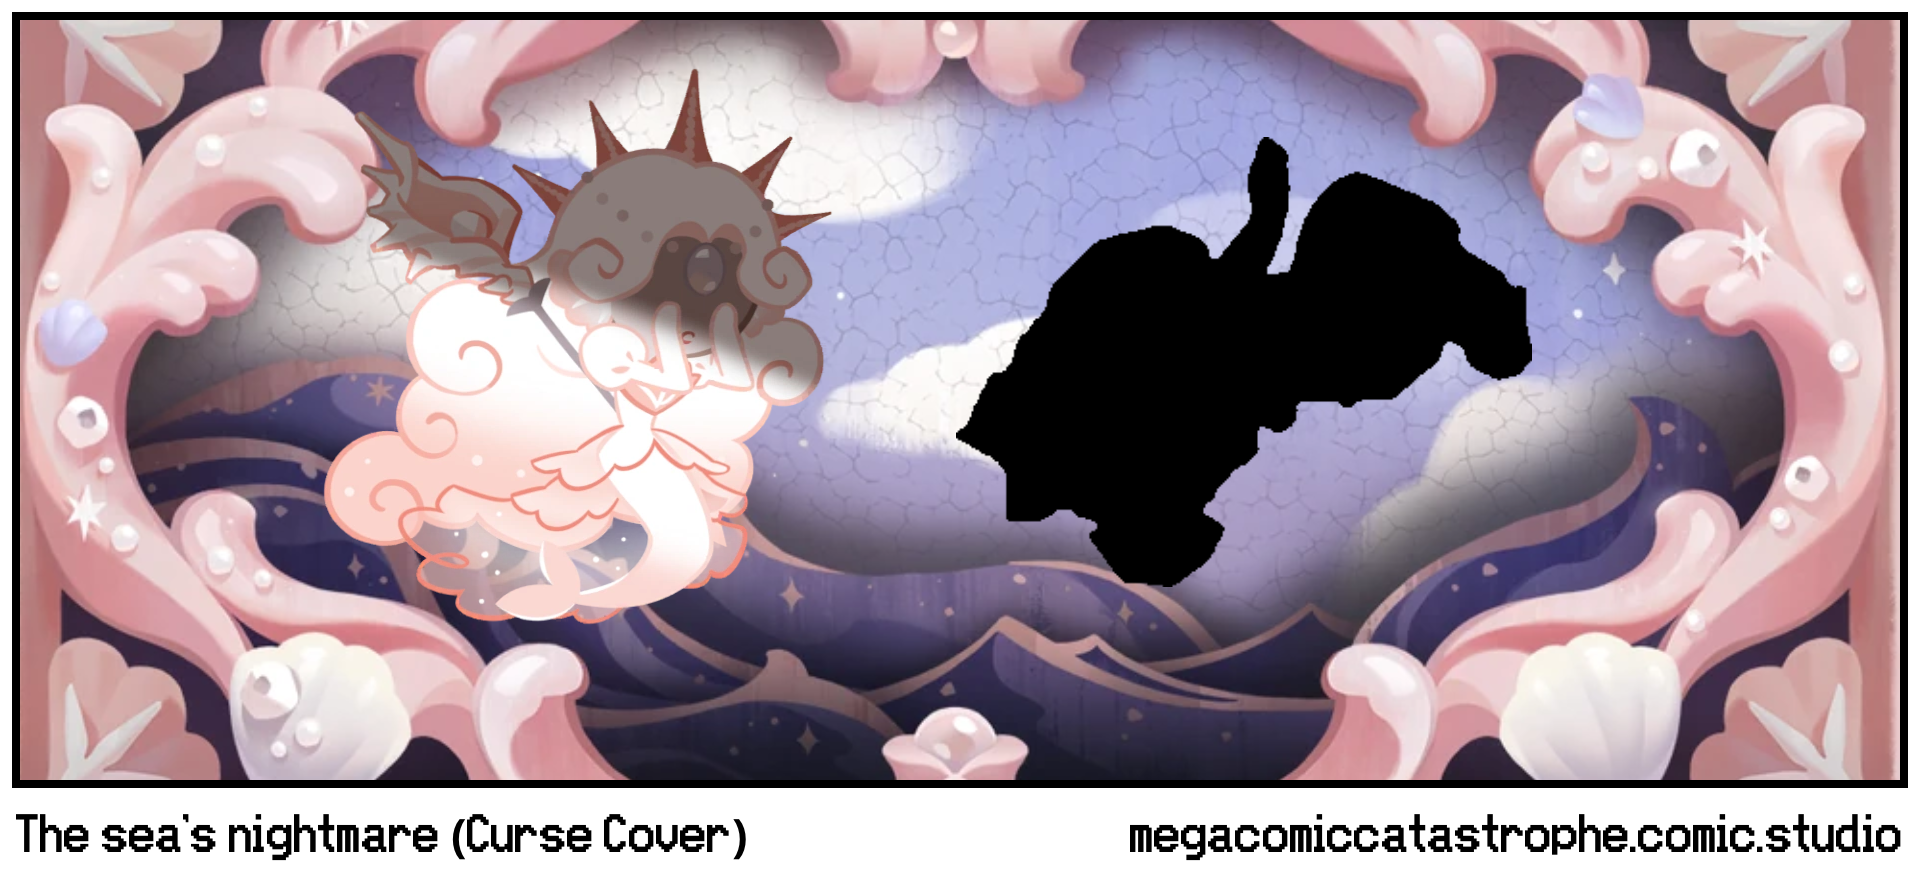 The sea’s nightmare (Curse Cover)